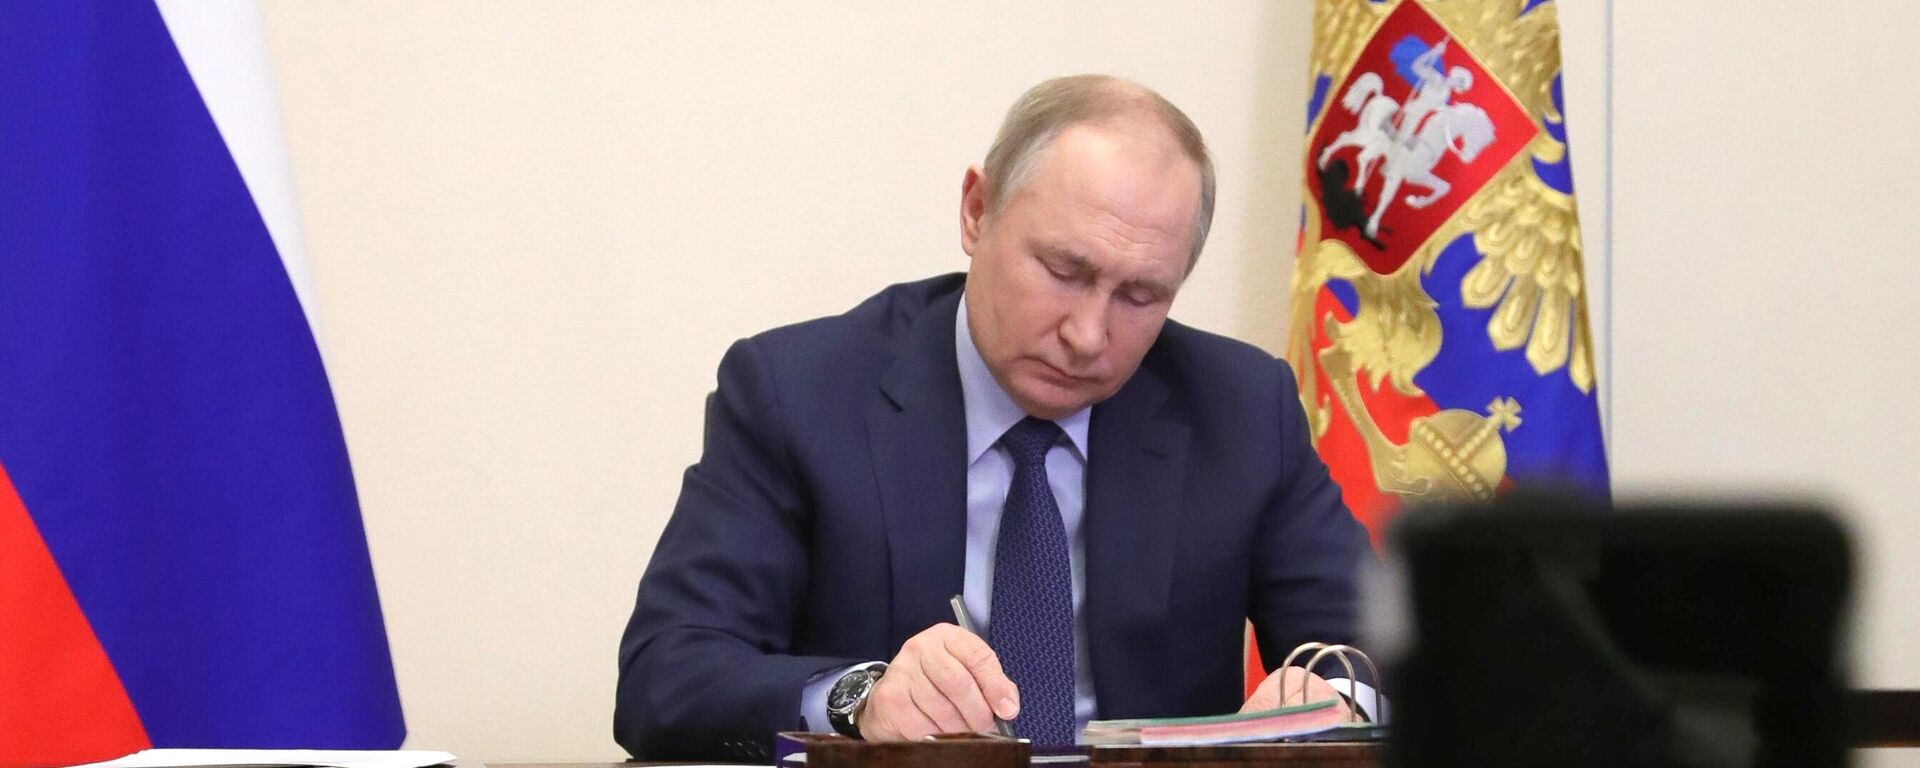 O presidente da Rússia, Vladimir Putin, participa de videoconferência em 25 de março de 2022. - Sputnik Brasil, 1920, 17.04.2022